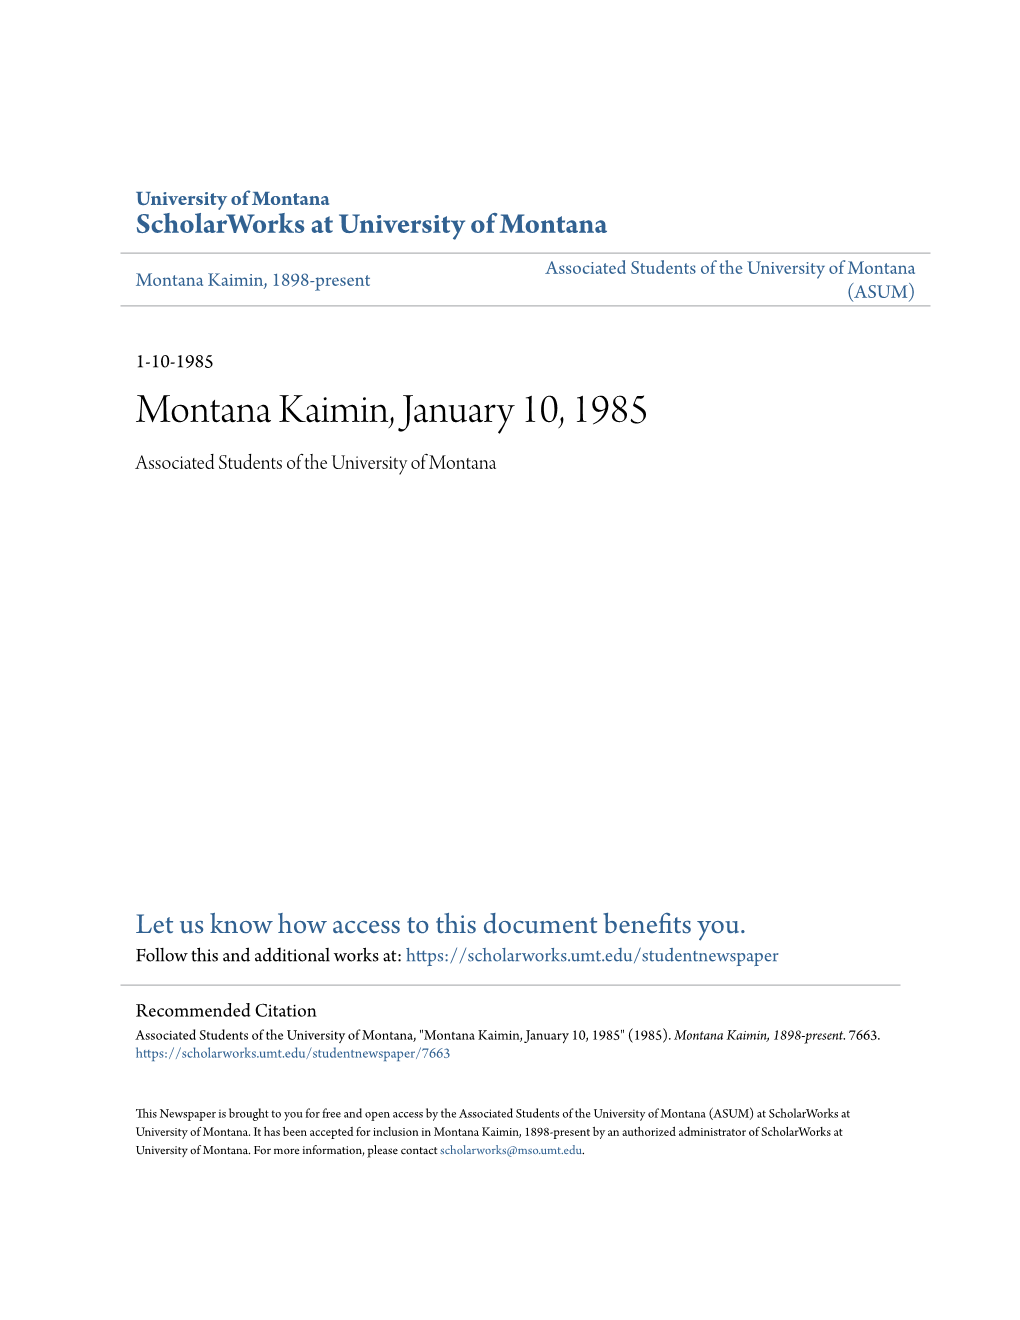 Montana Kaimin, January 10, 1985 Associated Students of the University of Montana